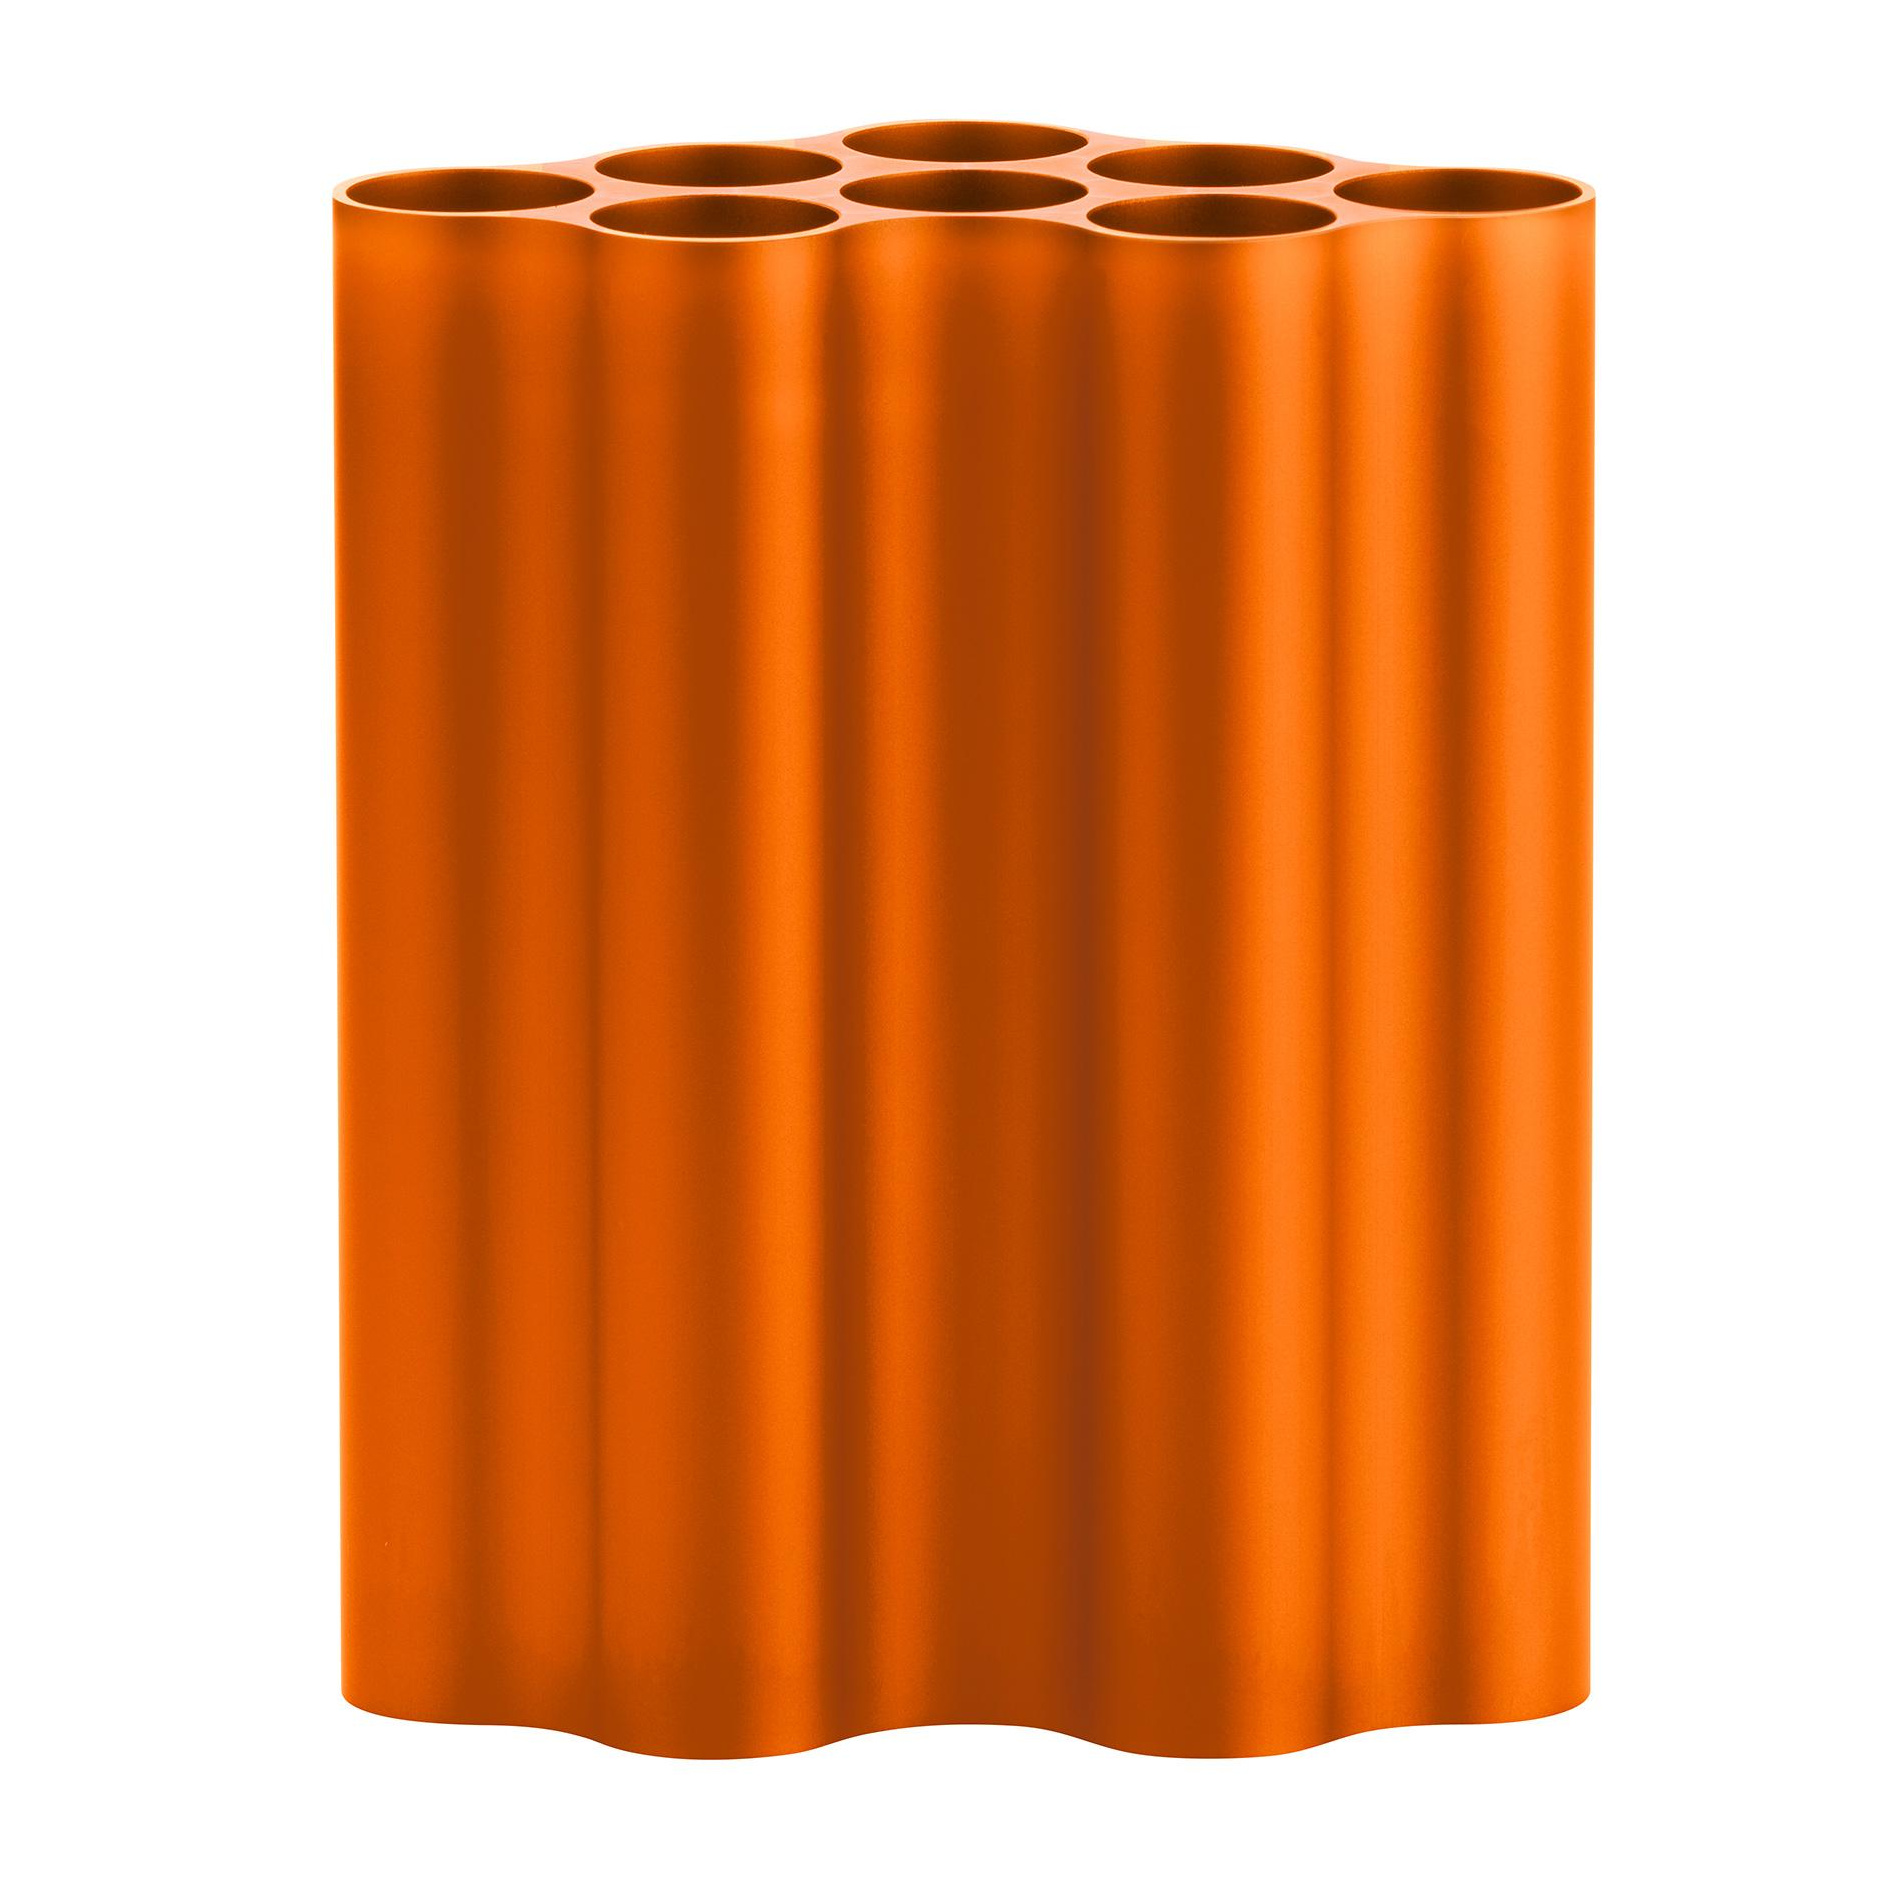 Vitra - Nuage Vase M - verbranntes orange/LxBxH 19,5x11x24cm von Vitra